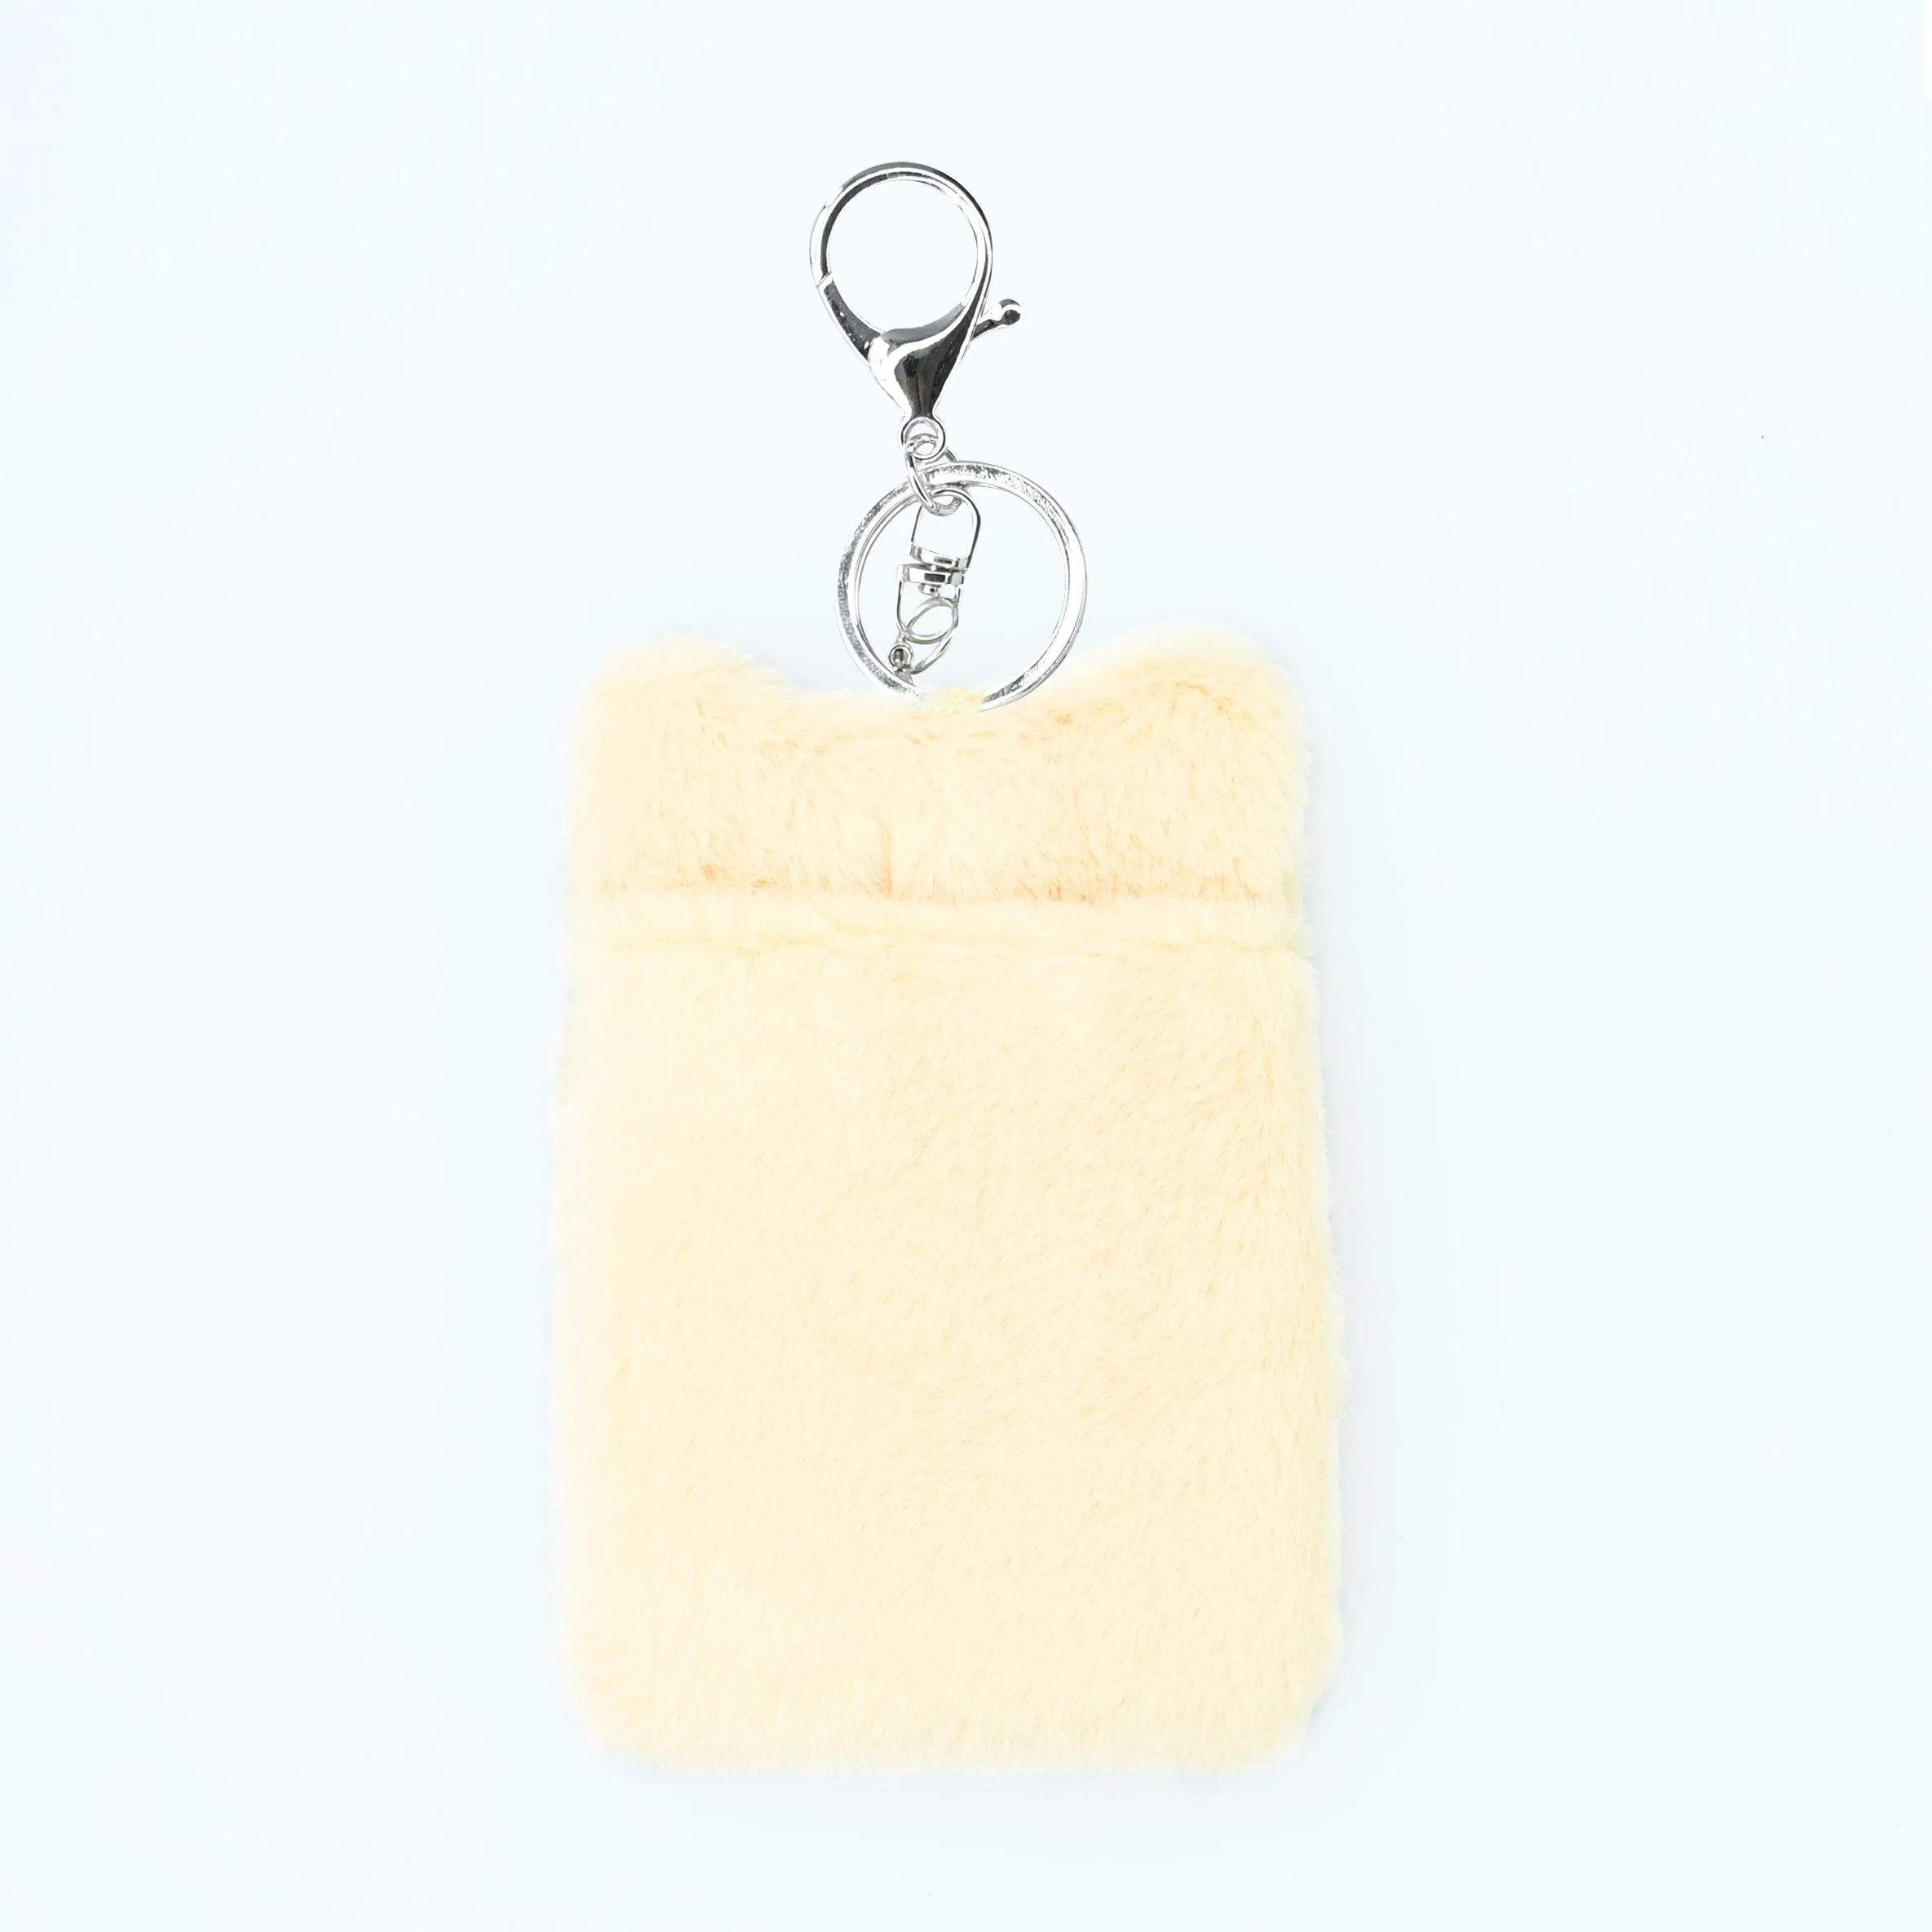 Fashion Soft Plush Fabric Card Holder Photo Transparent Case Cover Bag